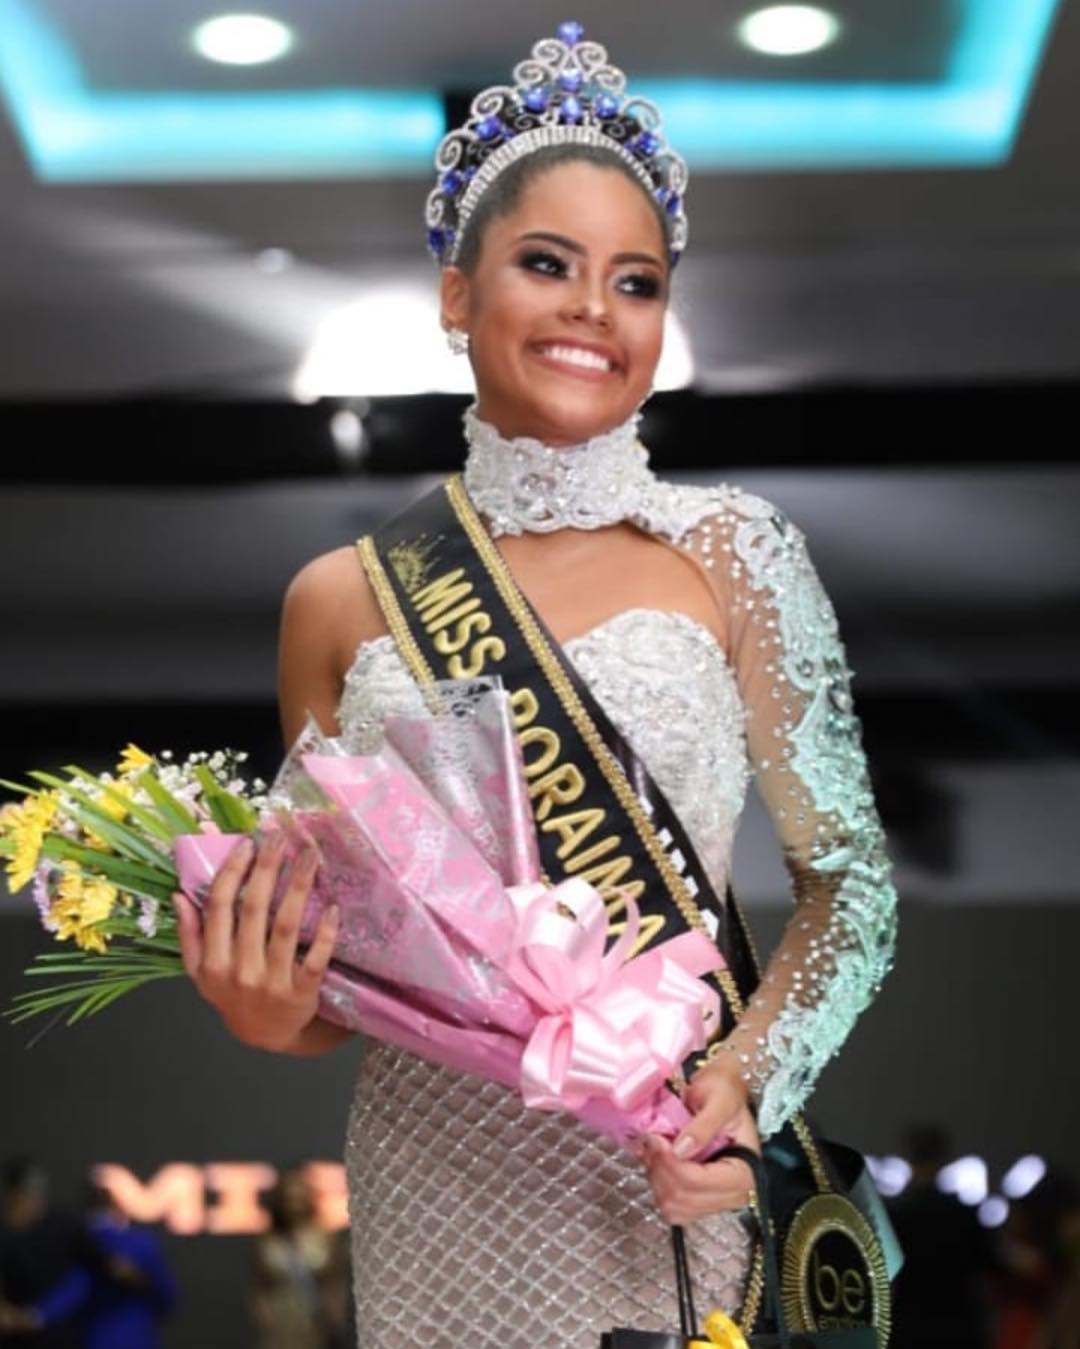 natali vitoria, top 15 de miss brasil universo 2019 /miss brasil teen universe 2017. primeira miss negra a vencer o miss roraima. - Página 8 49933811